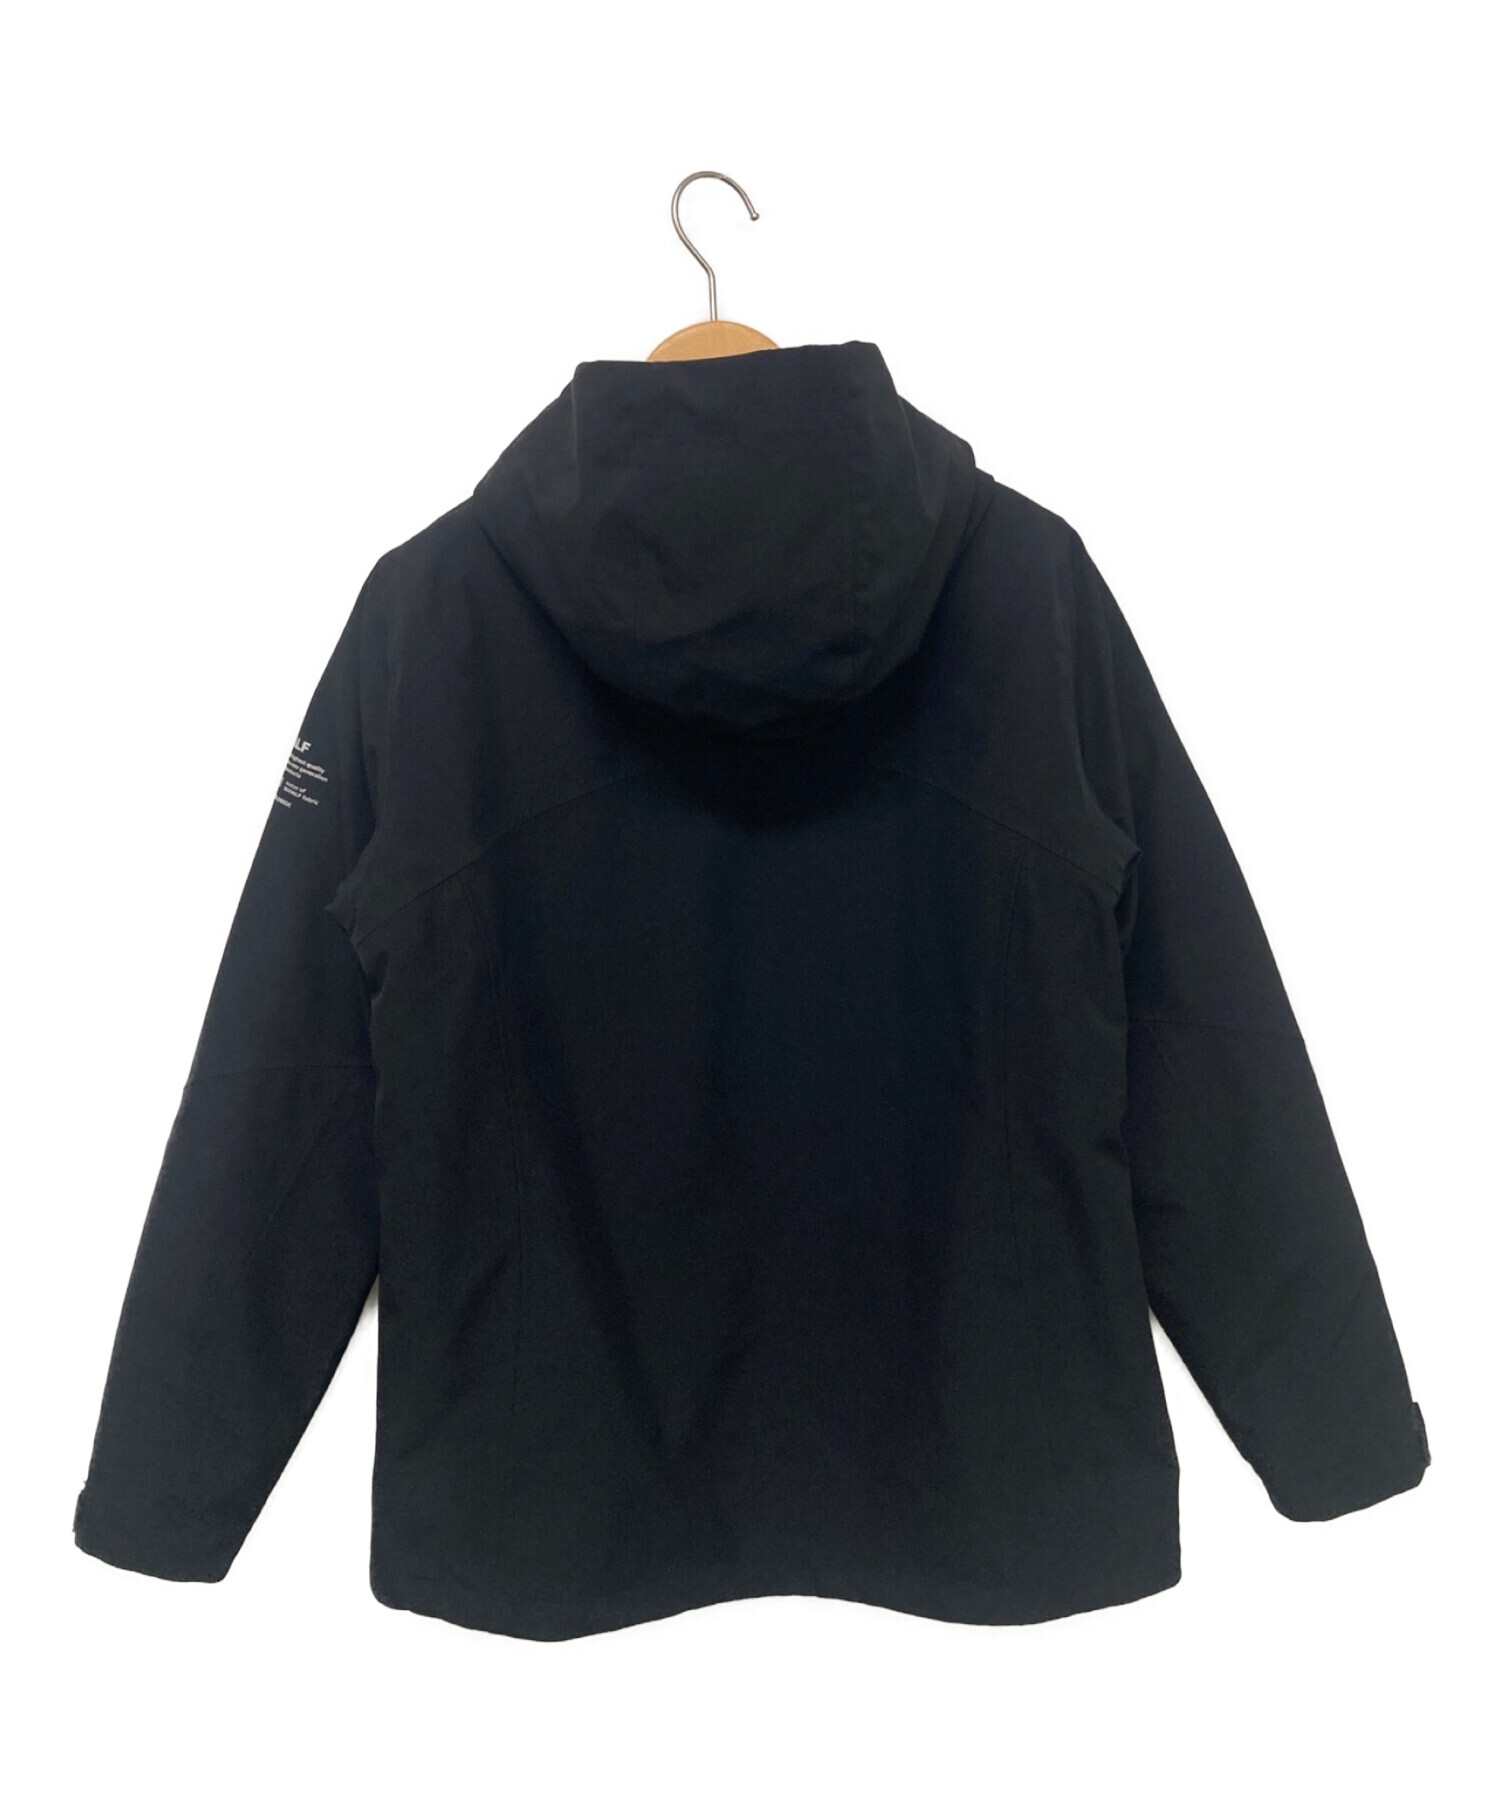 ECOALF (エコアルフ) KATMANDU マルチジャケット ブラック サイズ:S